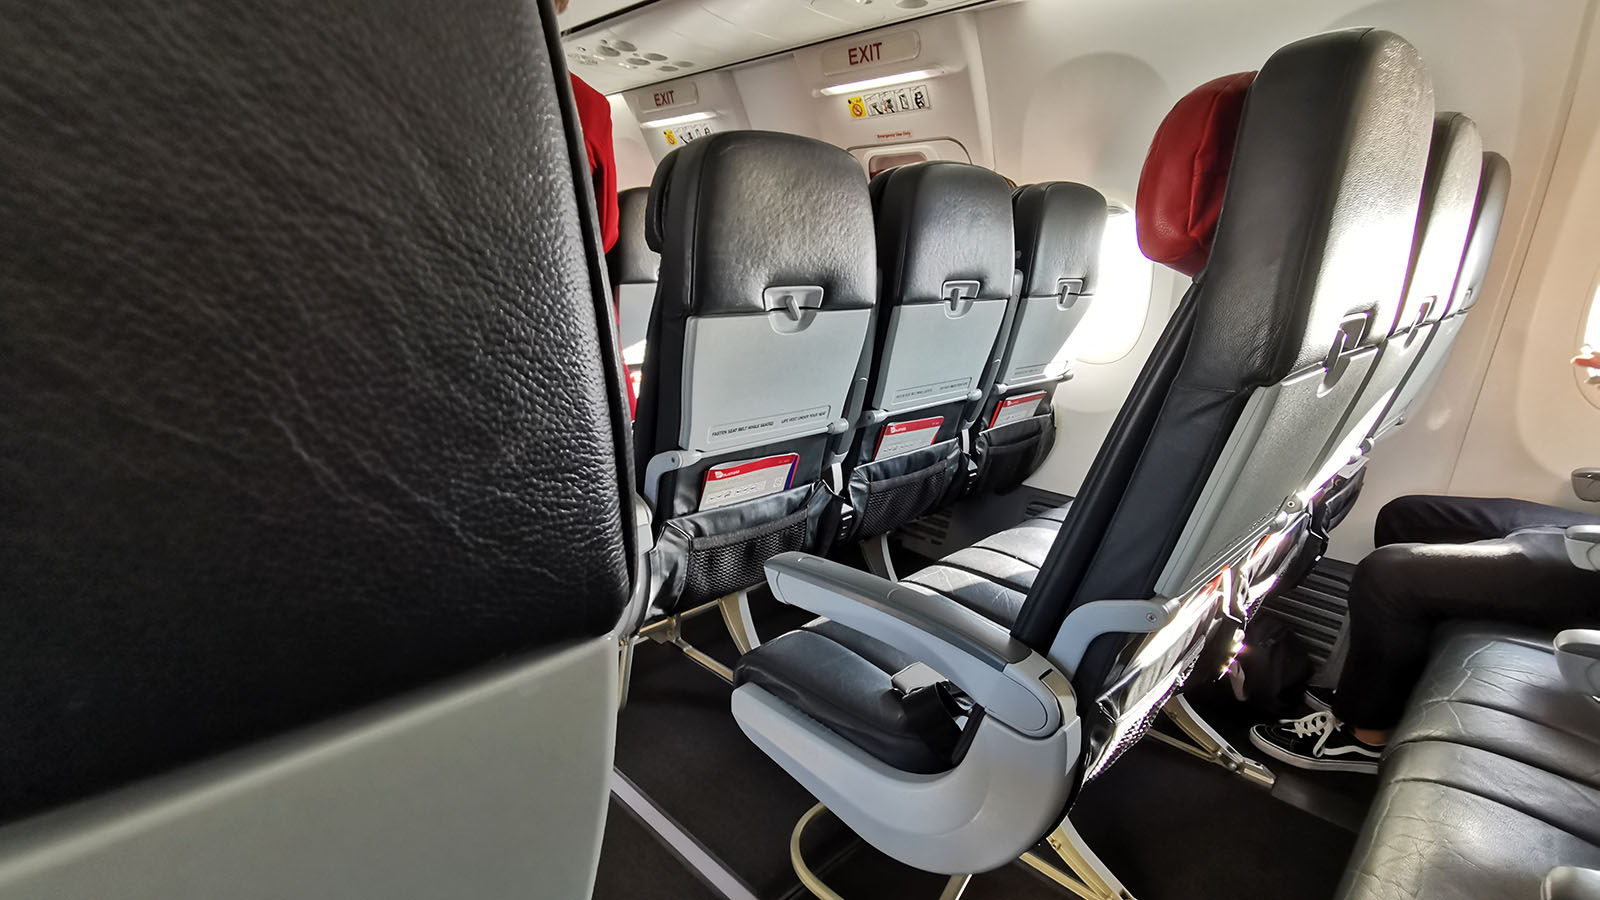 Virgin Australia Boeing 737 Economy Class